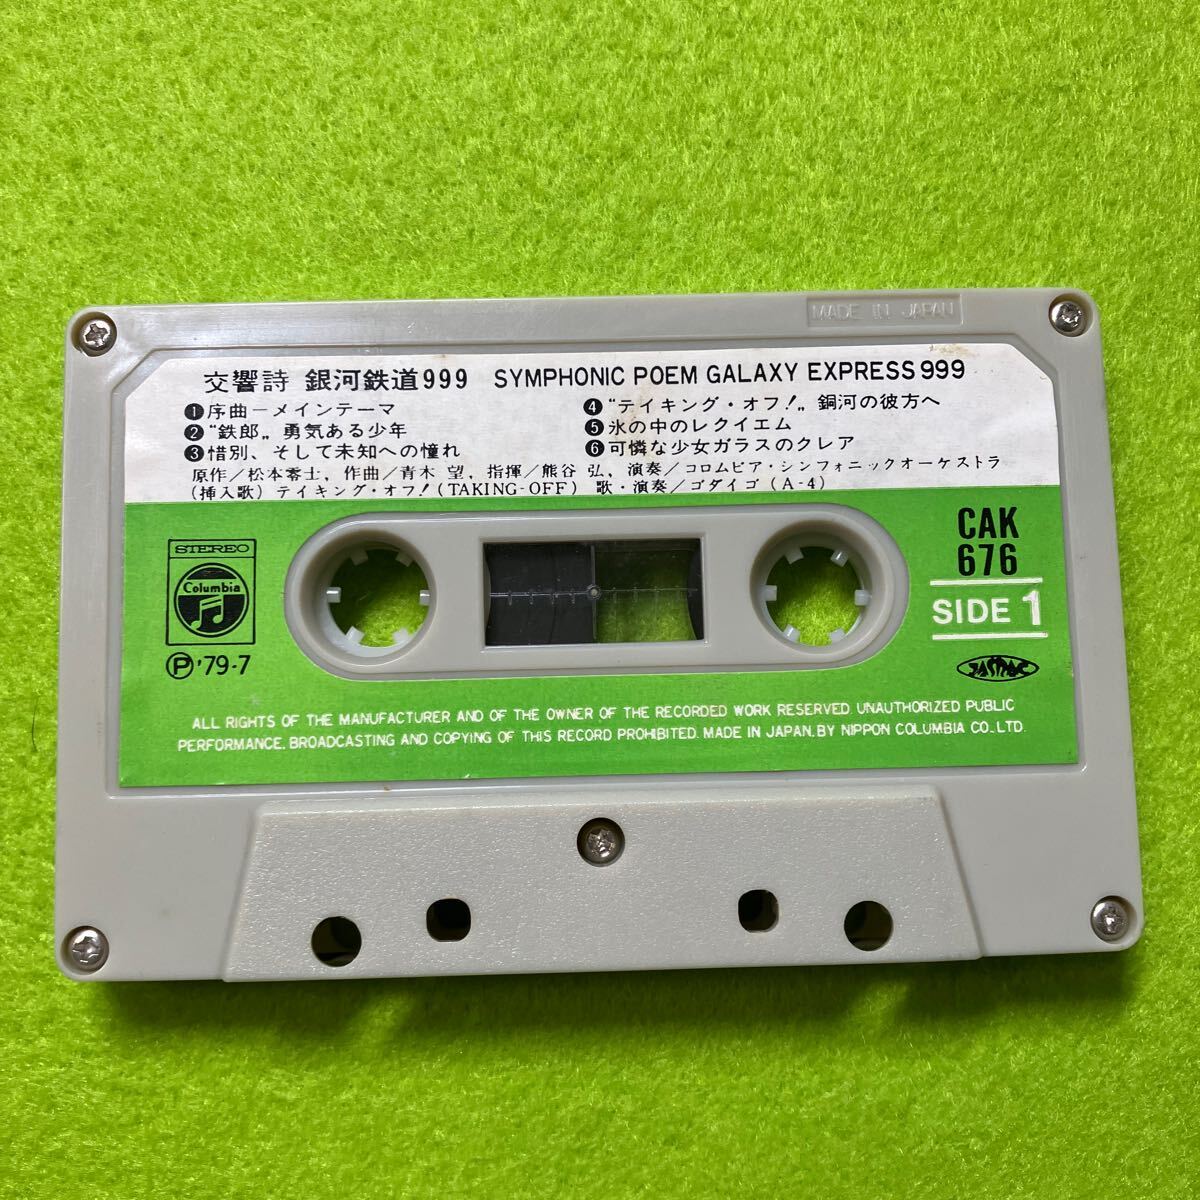 [ cassette tape ] reverberation poetry Ginga Tetsudou 999 / lyric sheet lack of /CAK-676 / Matsumoto 0 ./s Lee na in / operation not yet verification retro 